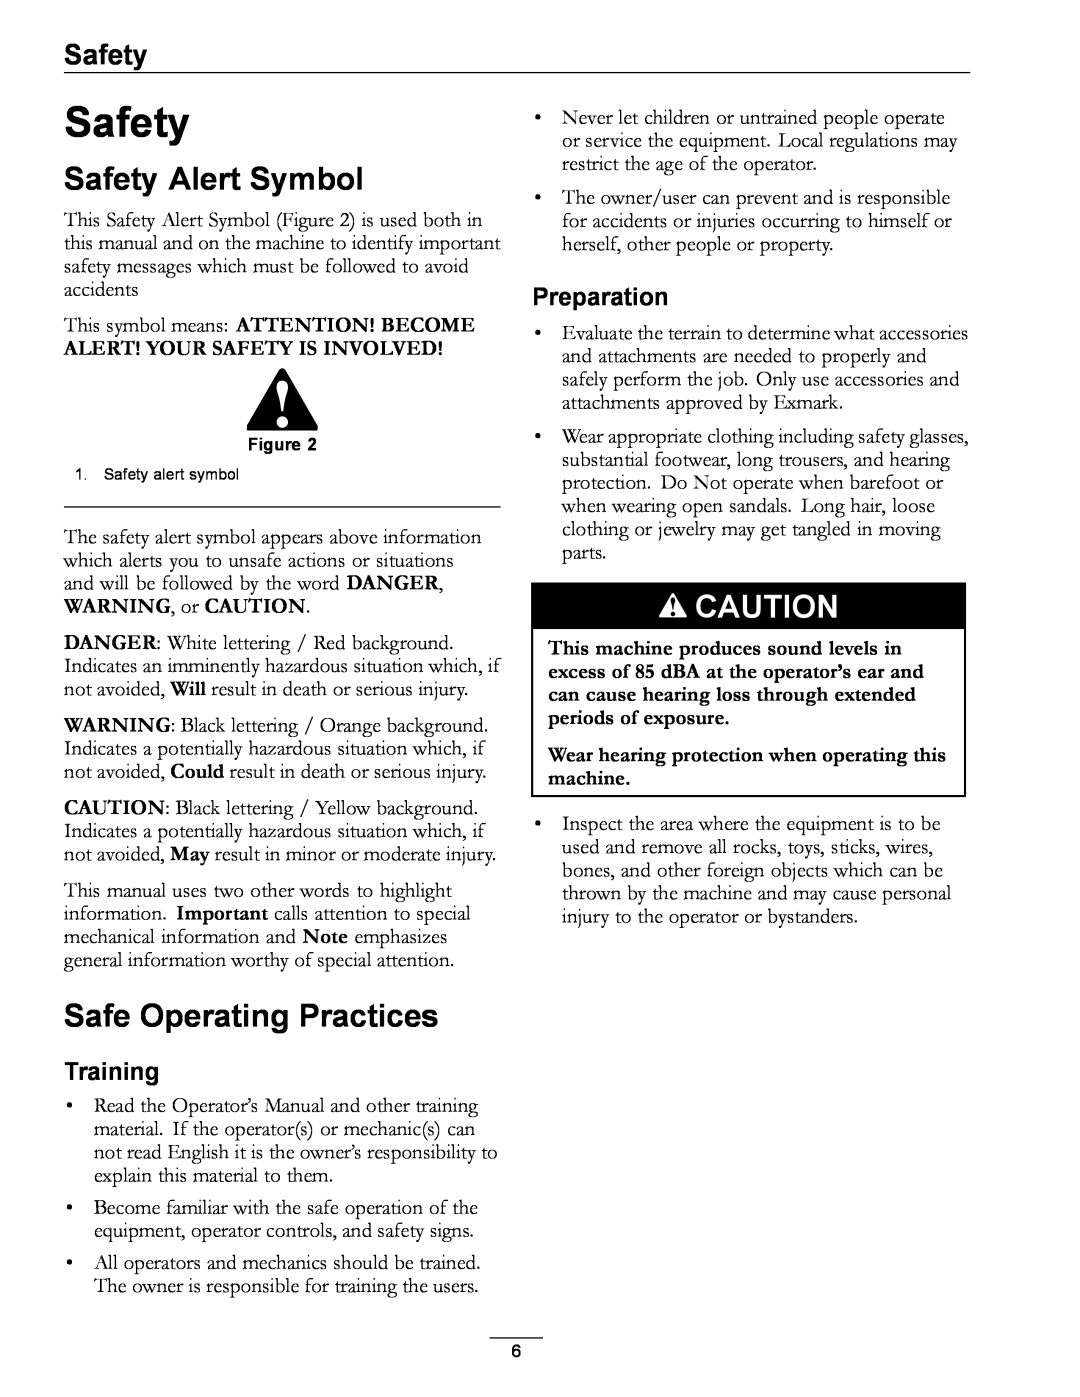 Exmark LZ27KC604 Safety Alert Symbol, Safe Operating Practices, Training, Preparation, Alert! Your Safety Is Involved 